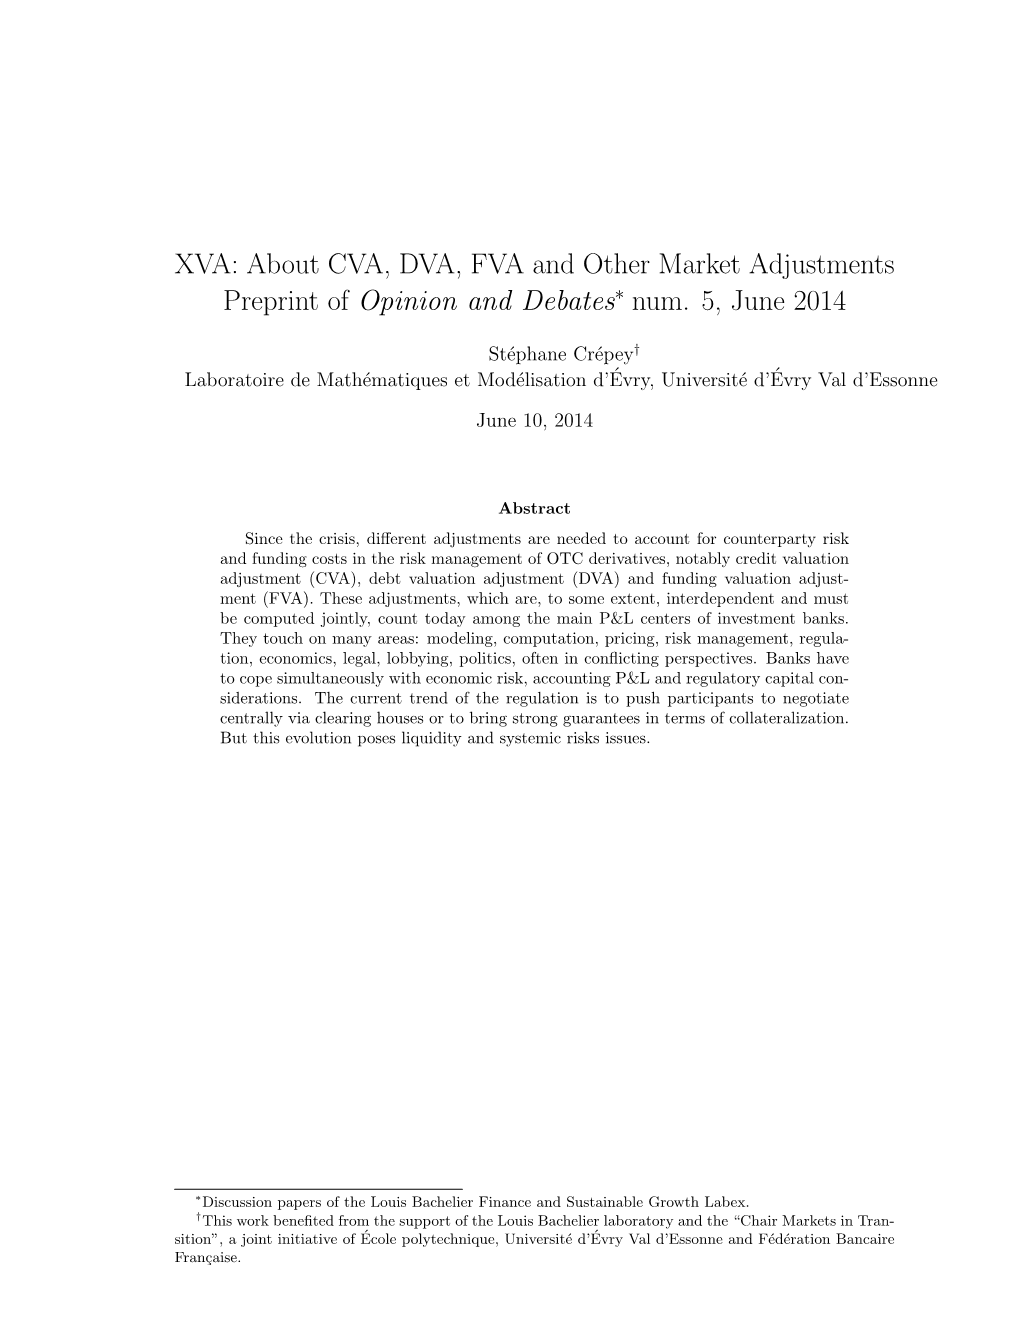 XVA: About CVA, DVA, FVA and Other Market Adjustments Preprint of Opinion and Debates∗ Num